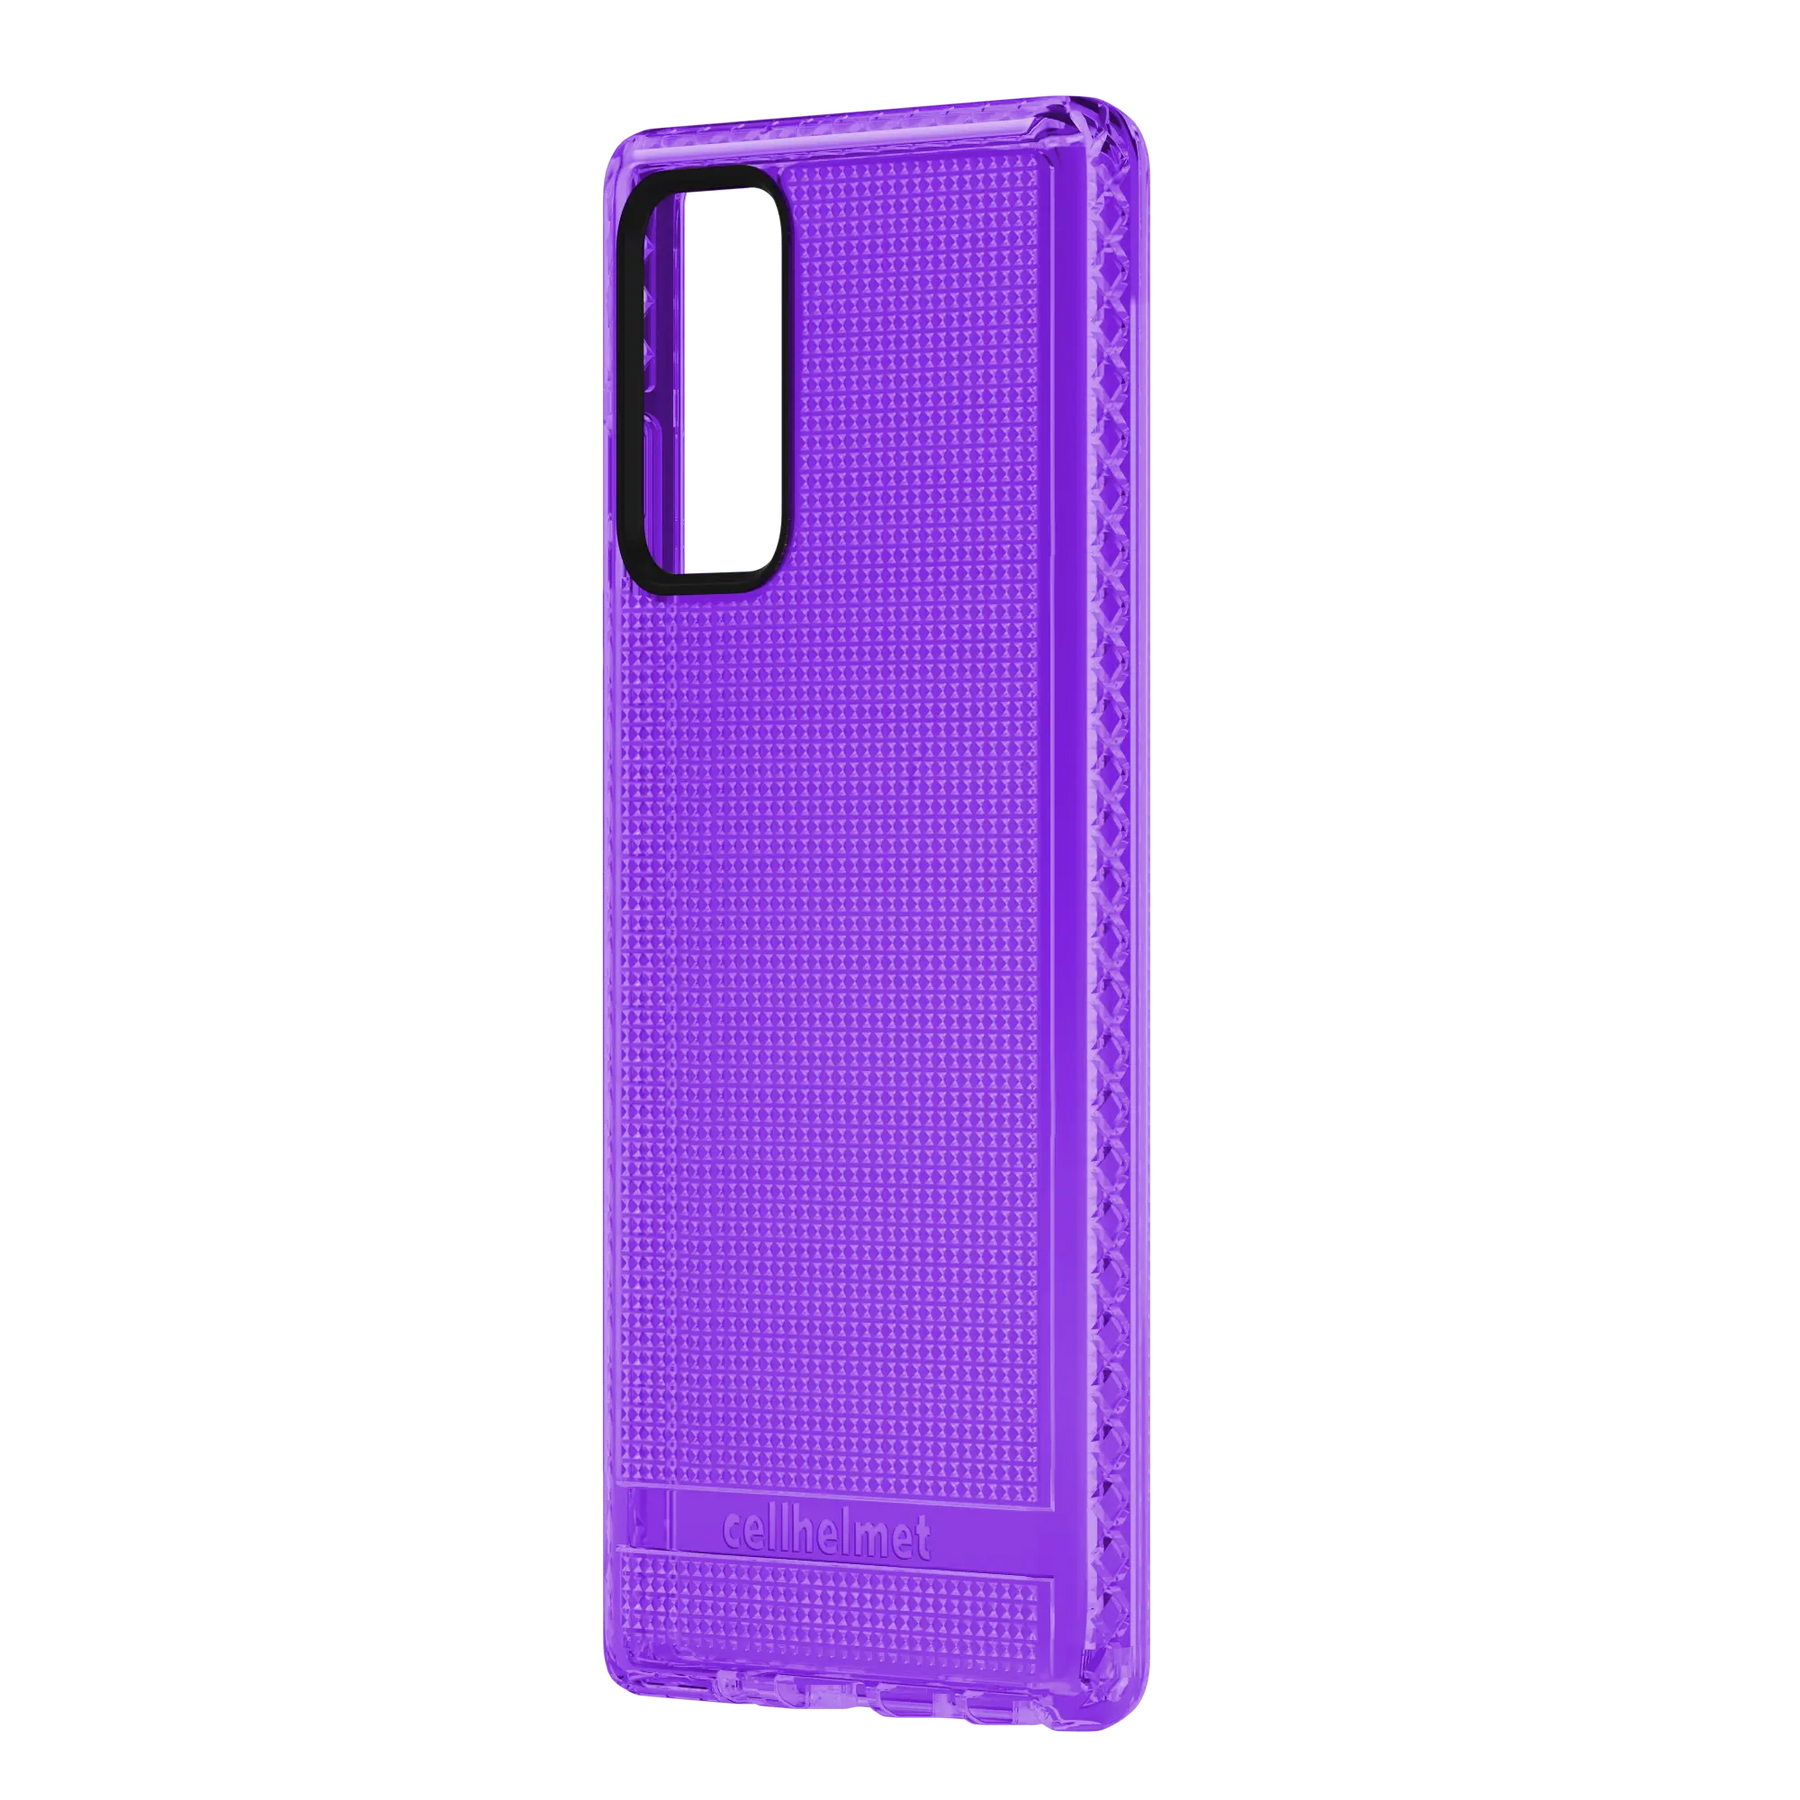  Altitude X Series for Samsung Galaxy Note 20 Ultra 5G  - Purple cellhelmet cellhelmet